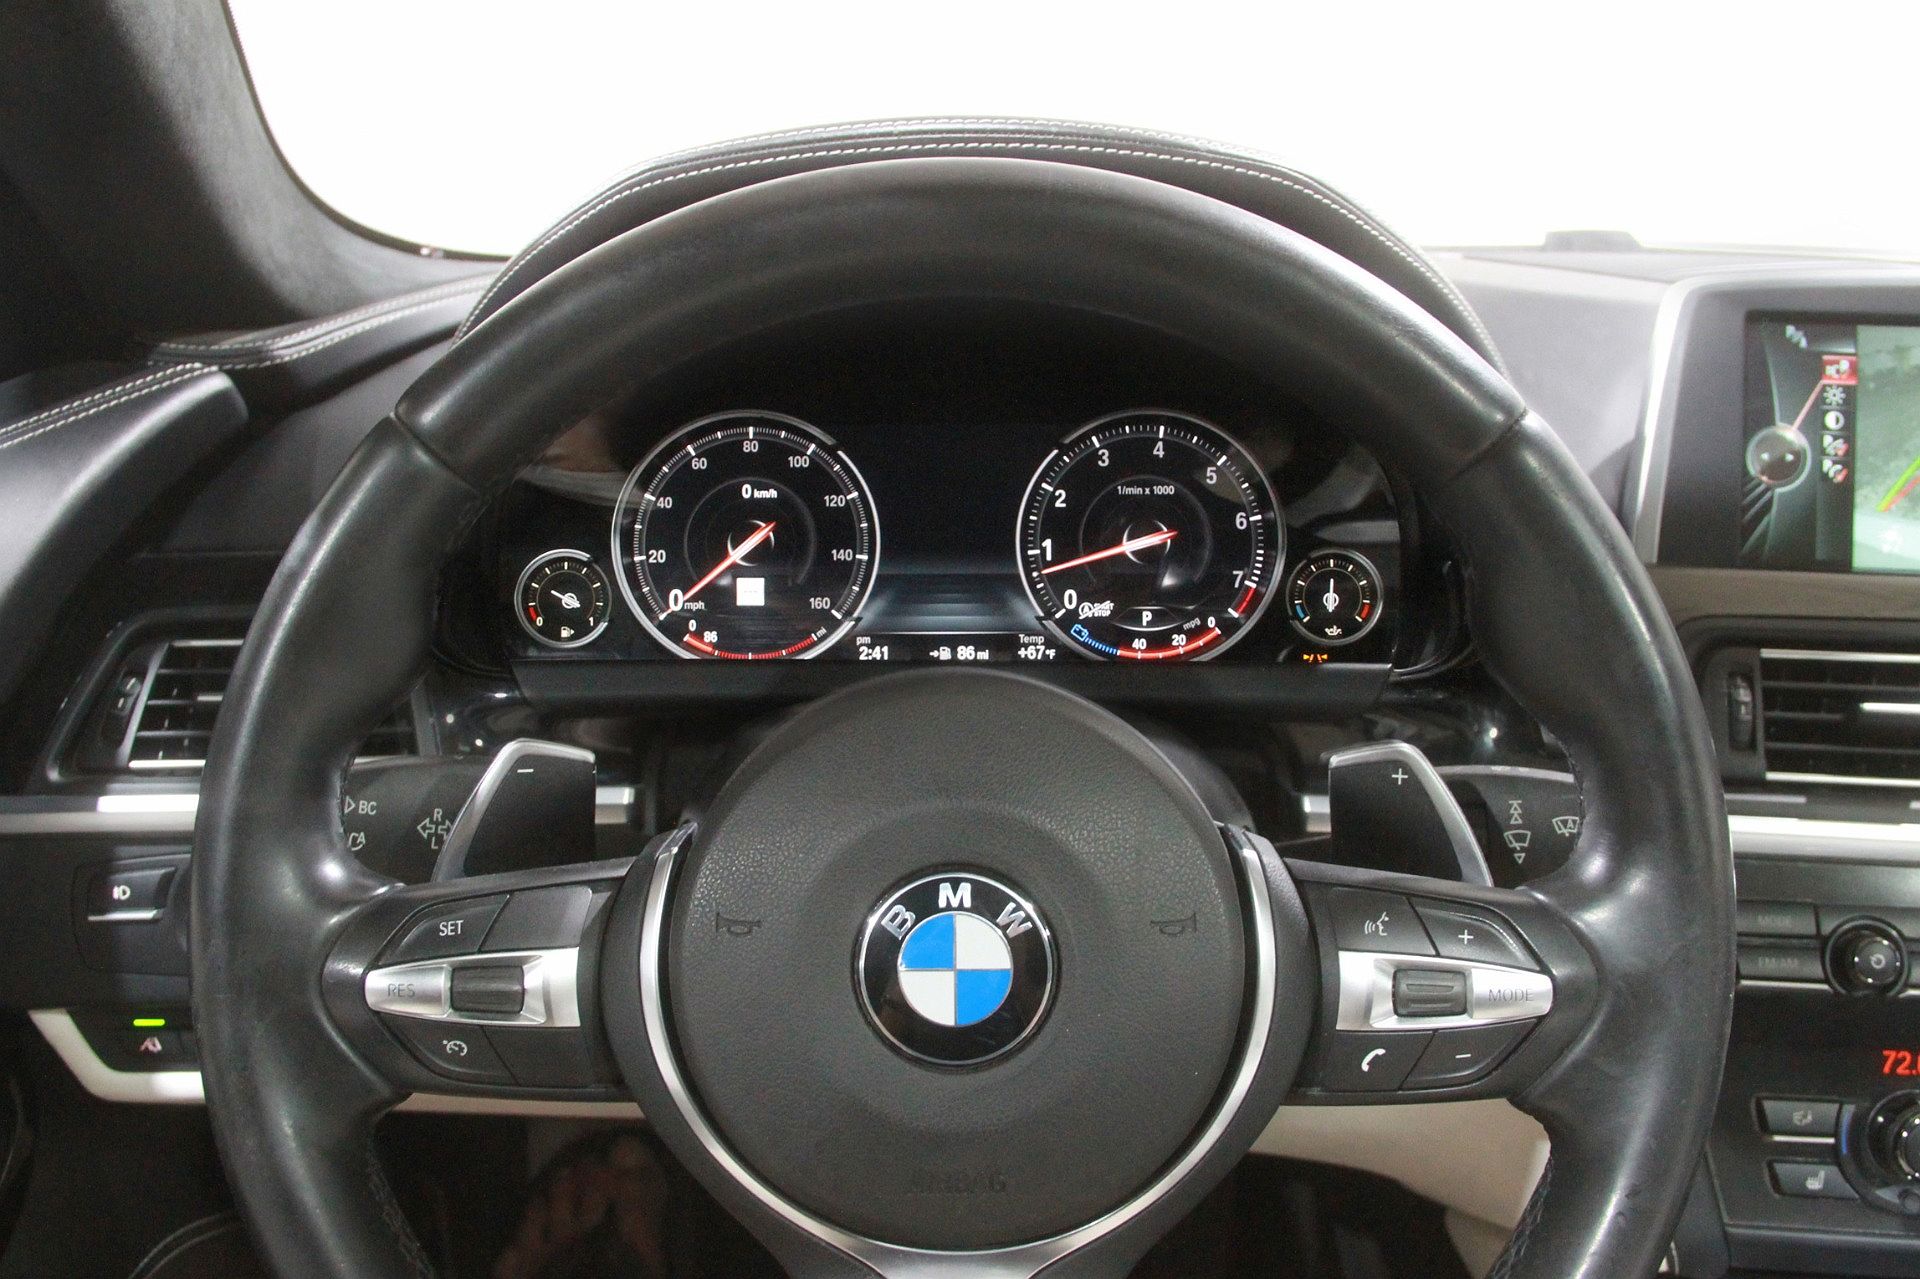 2014 BMW 6 Series 650i xDrive image 26